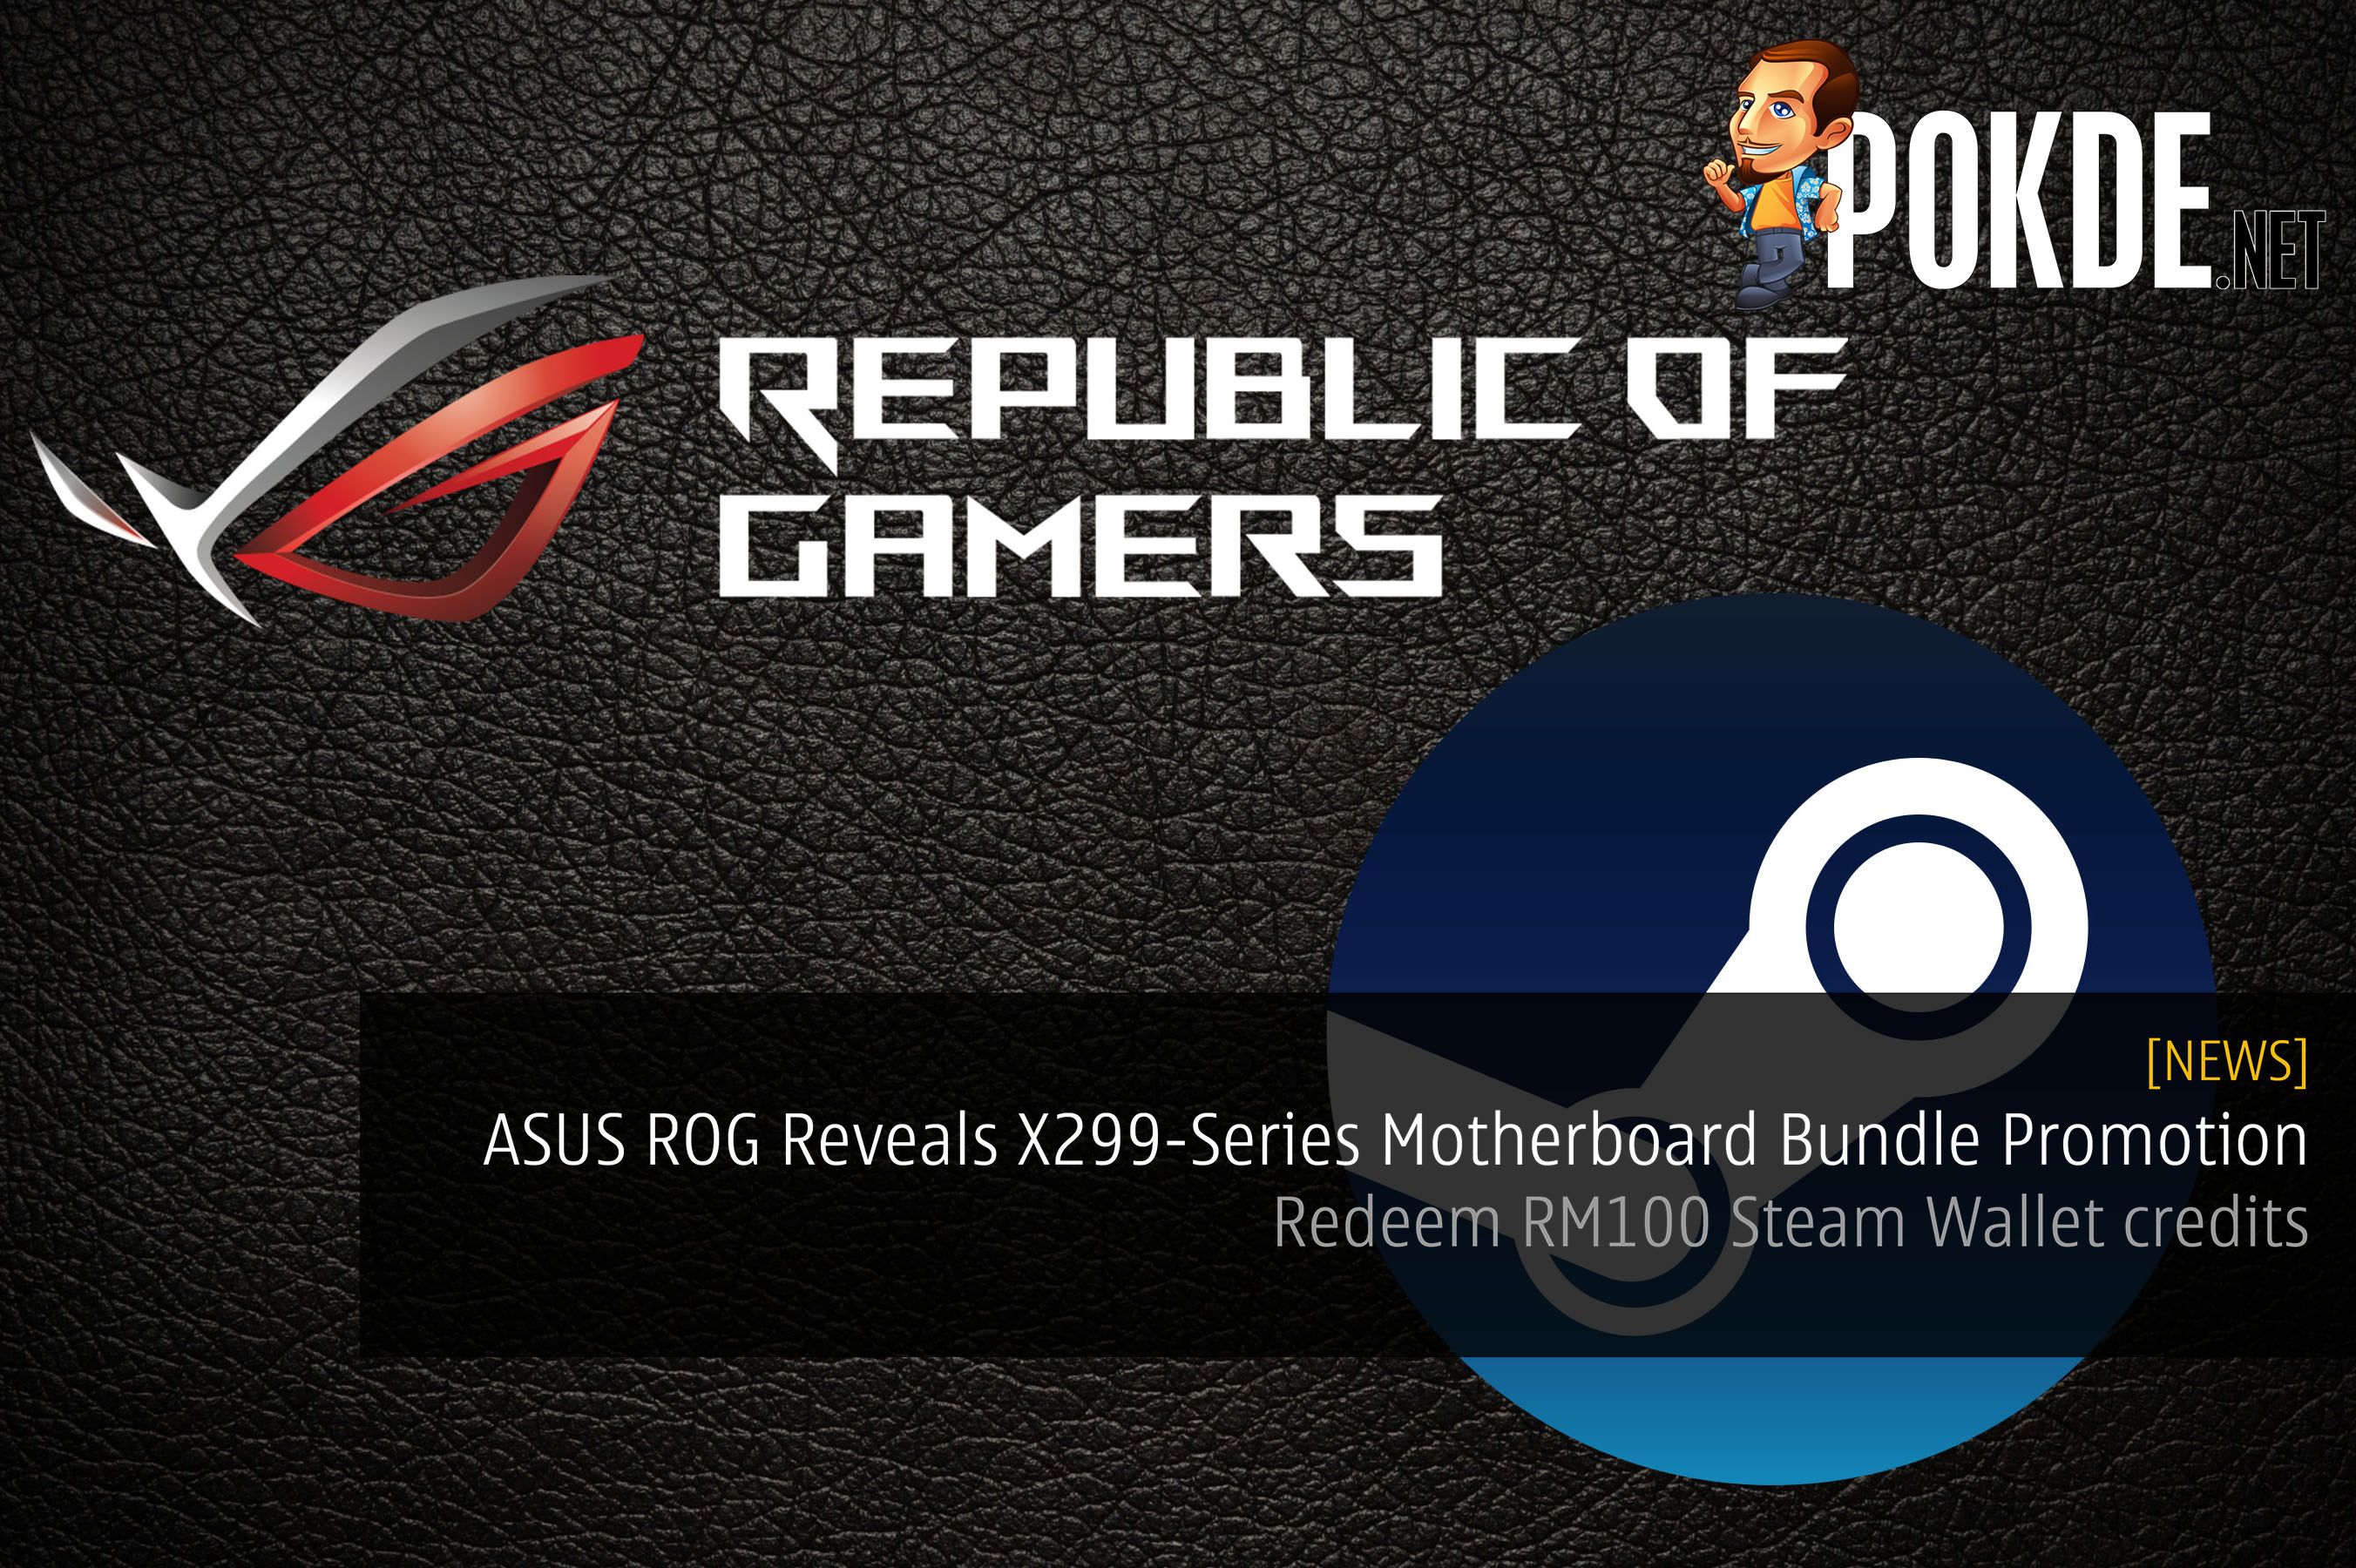 ASUS ROG Reveals X299 Motherboard Series Bundle Promotion - Redeem RM100 Steam Wallet credits 36